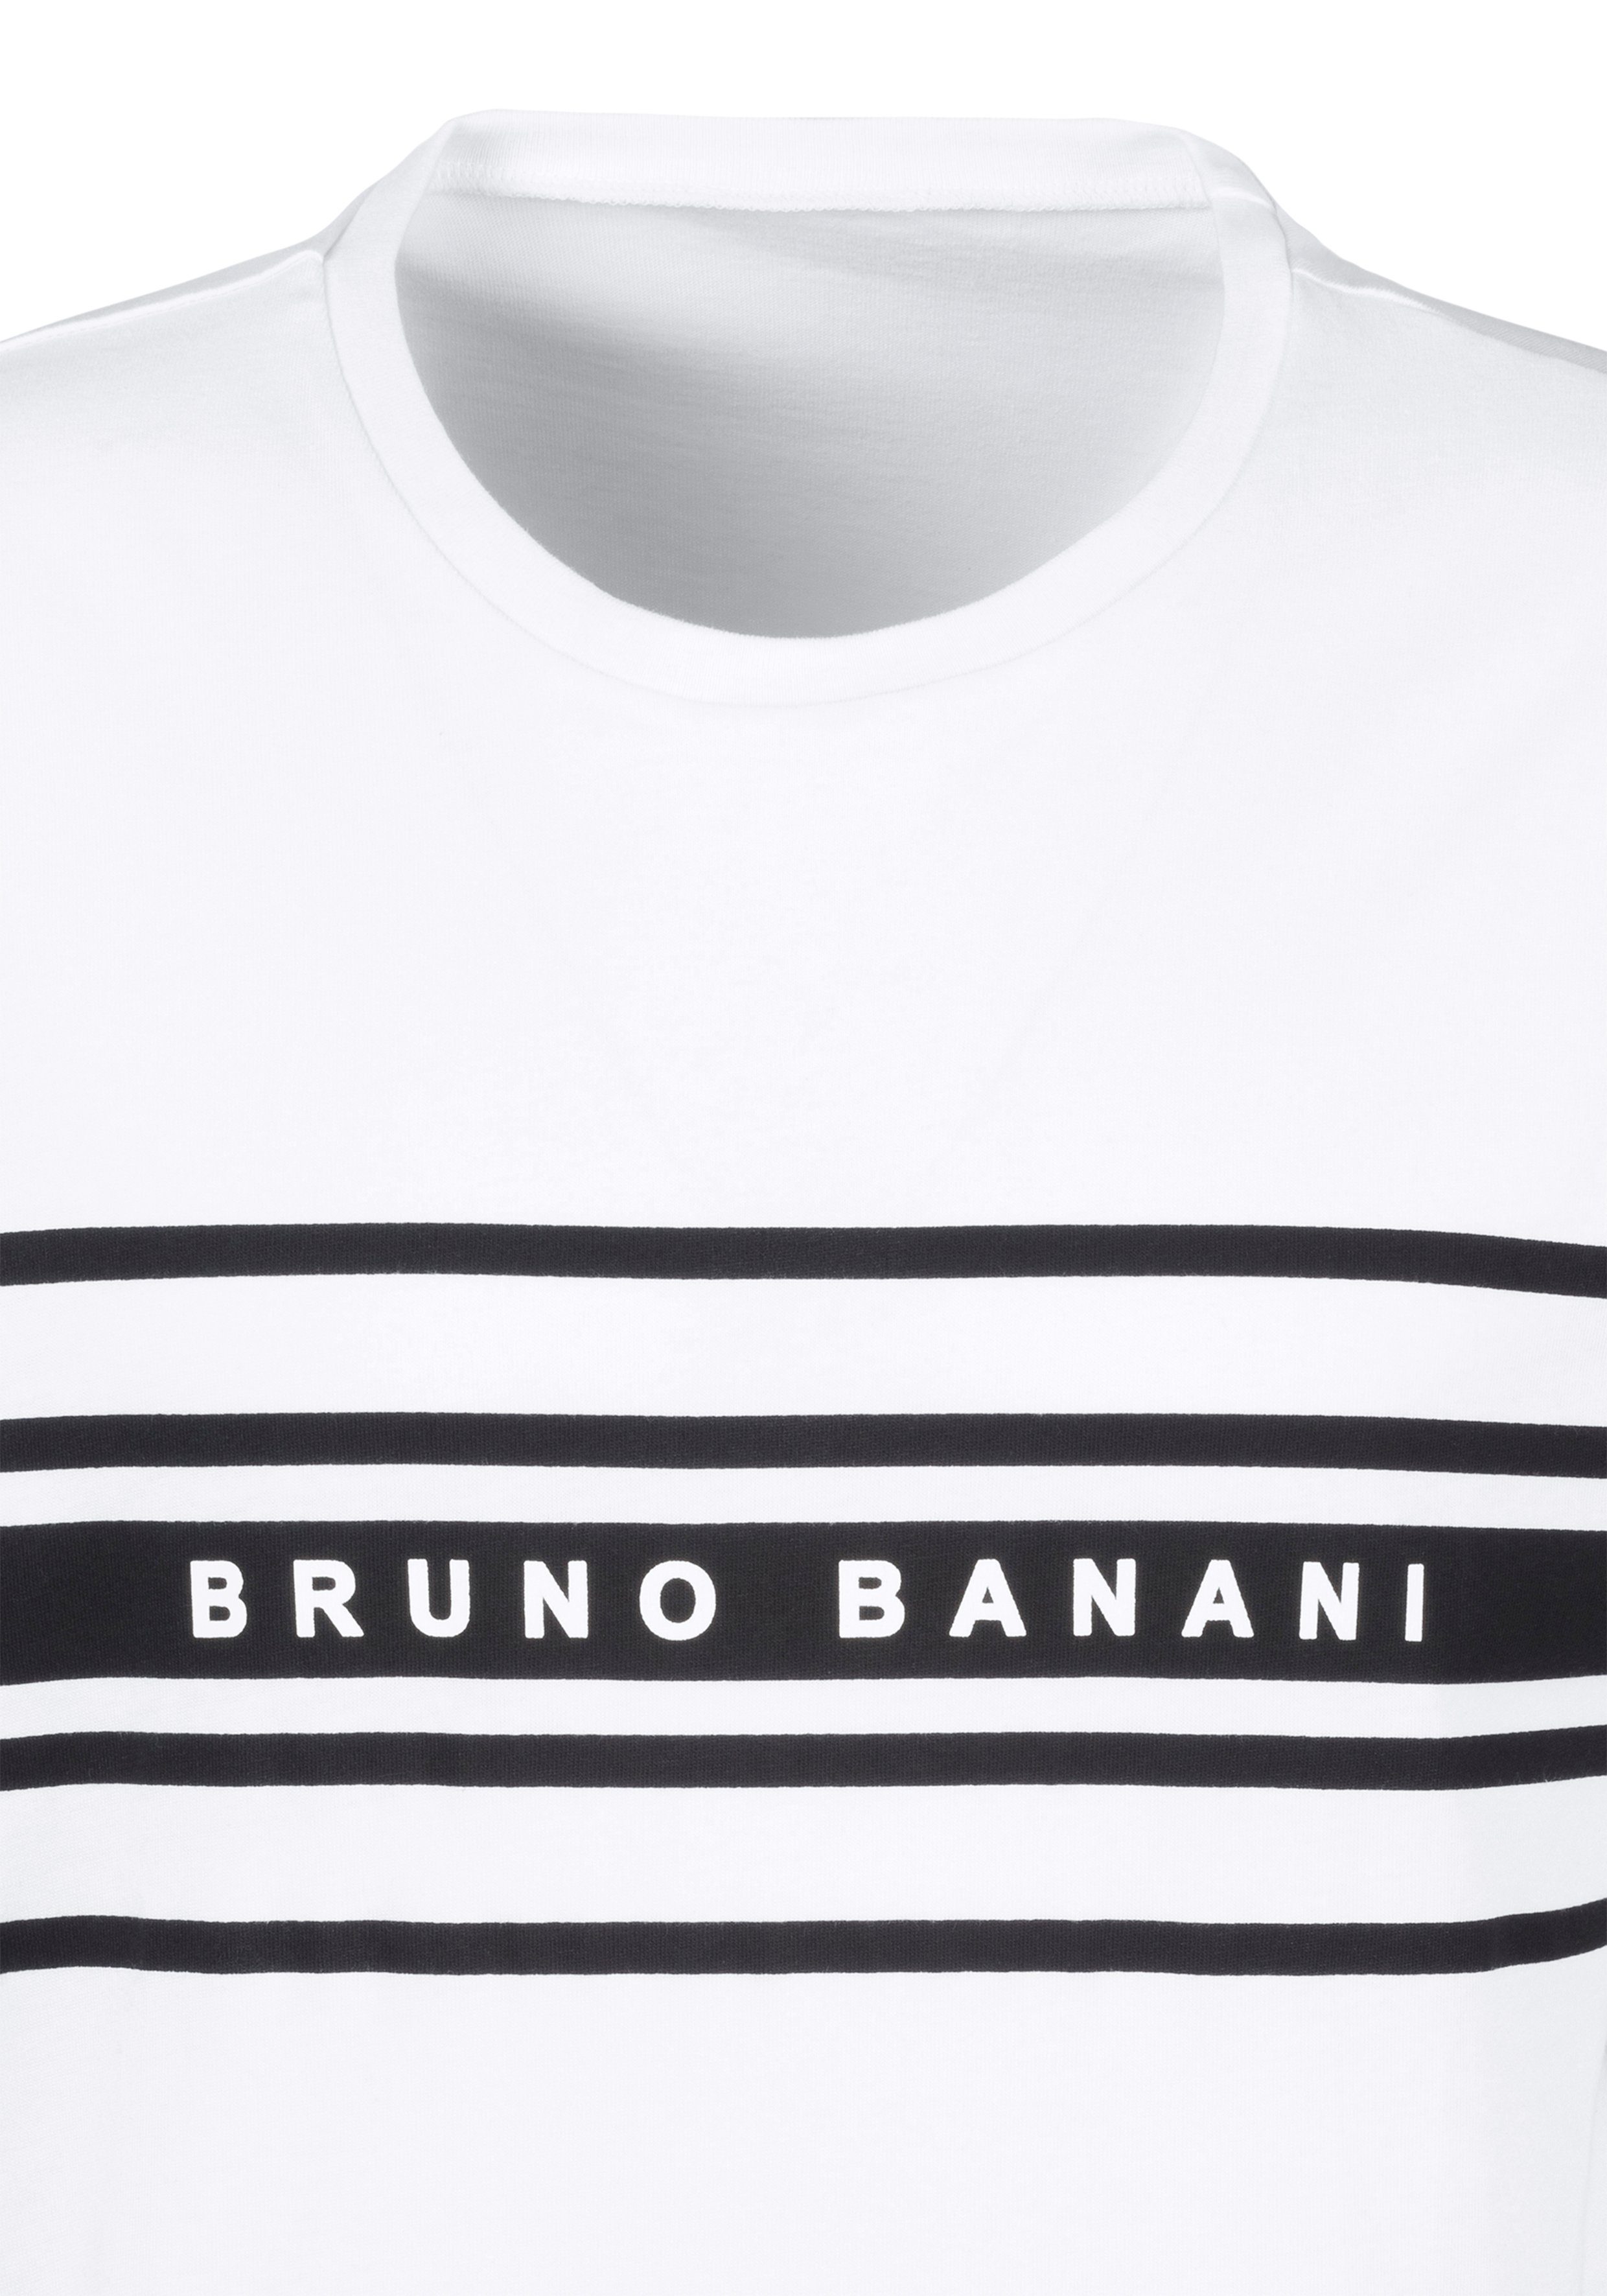 Bruno Banani Shorty 1 Stück) (2 tlg., Logodruck mit